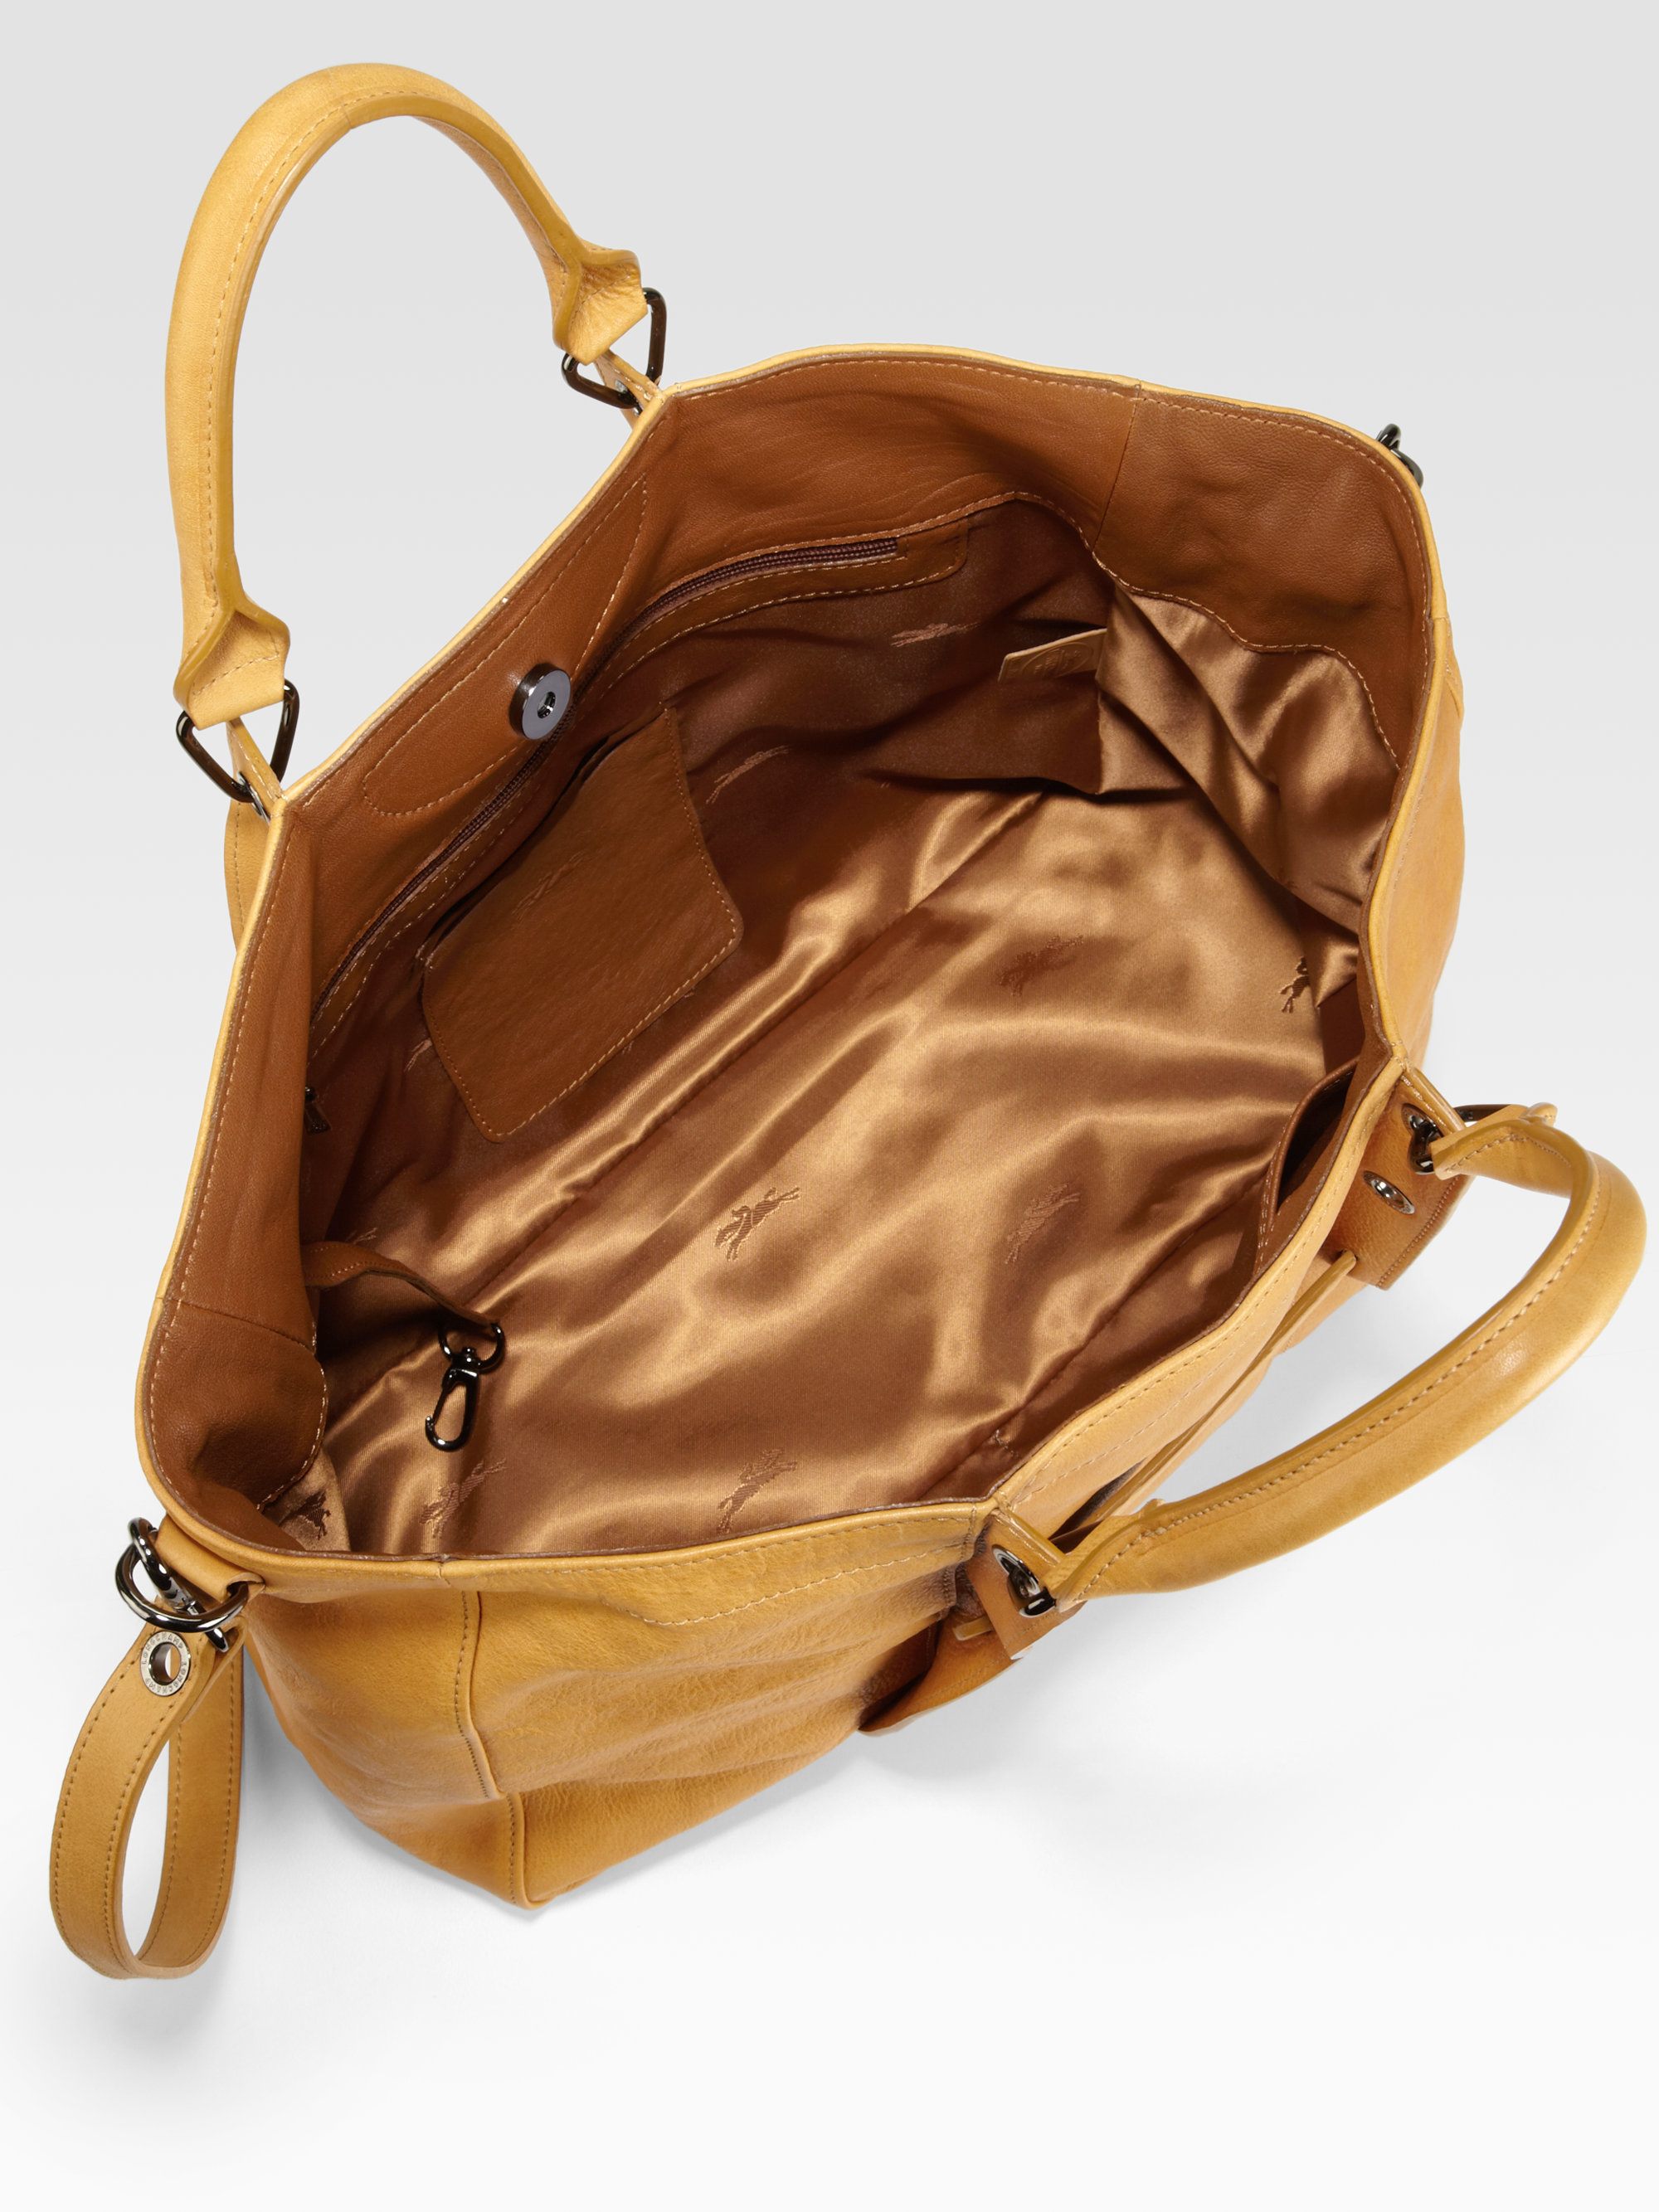 Longchamp 3d Bag Singapore Price | IUCN